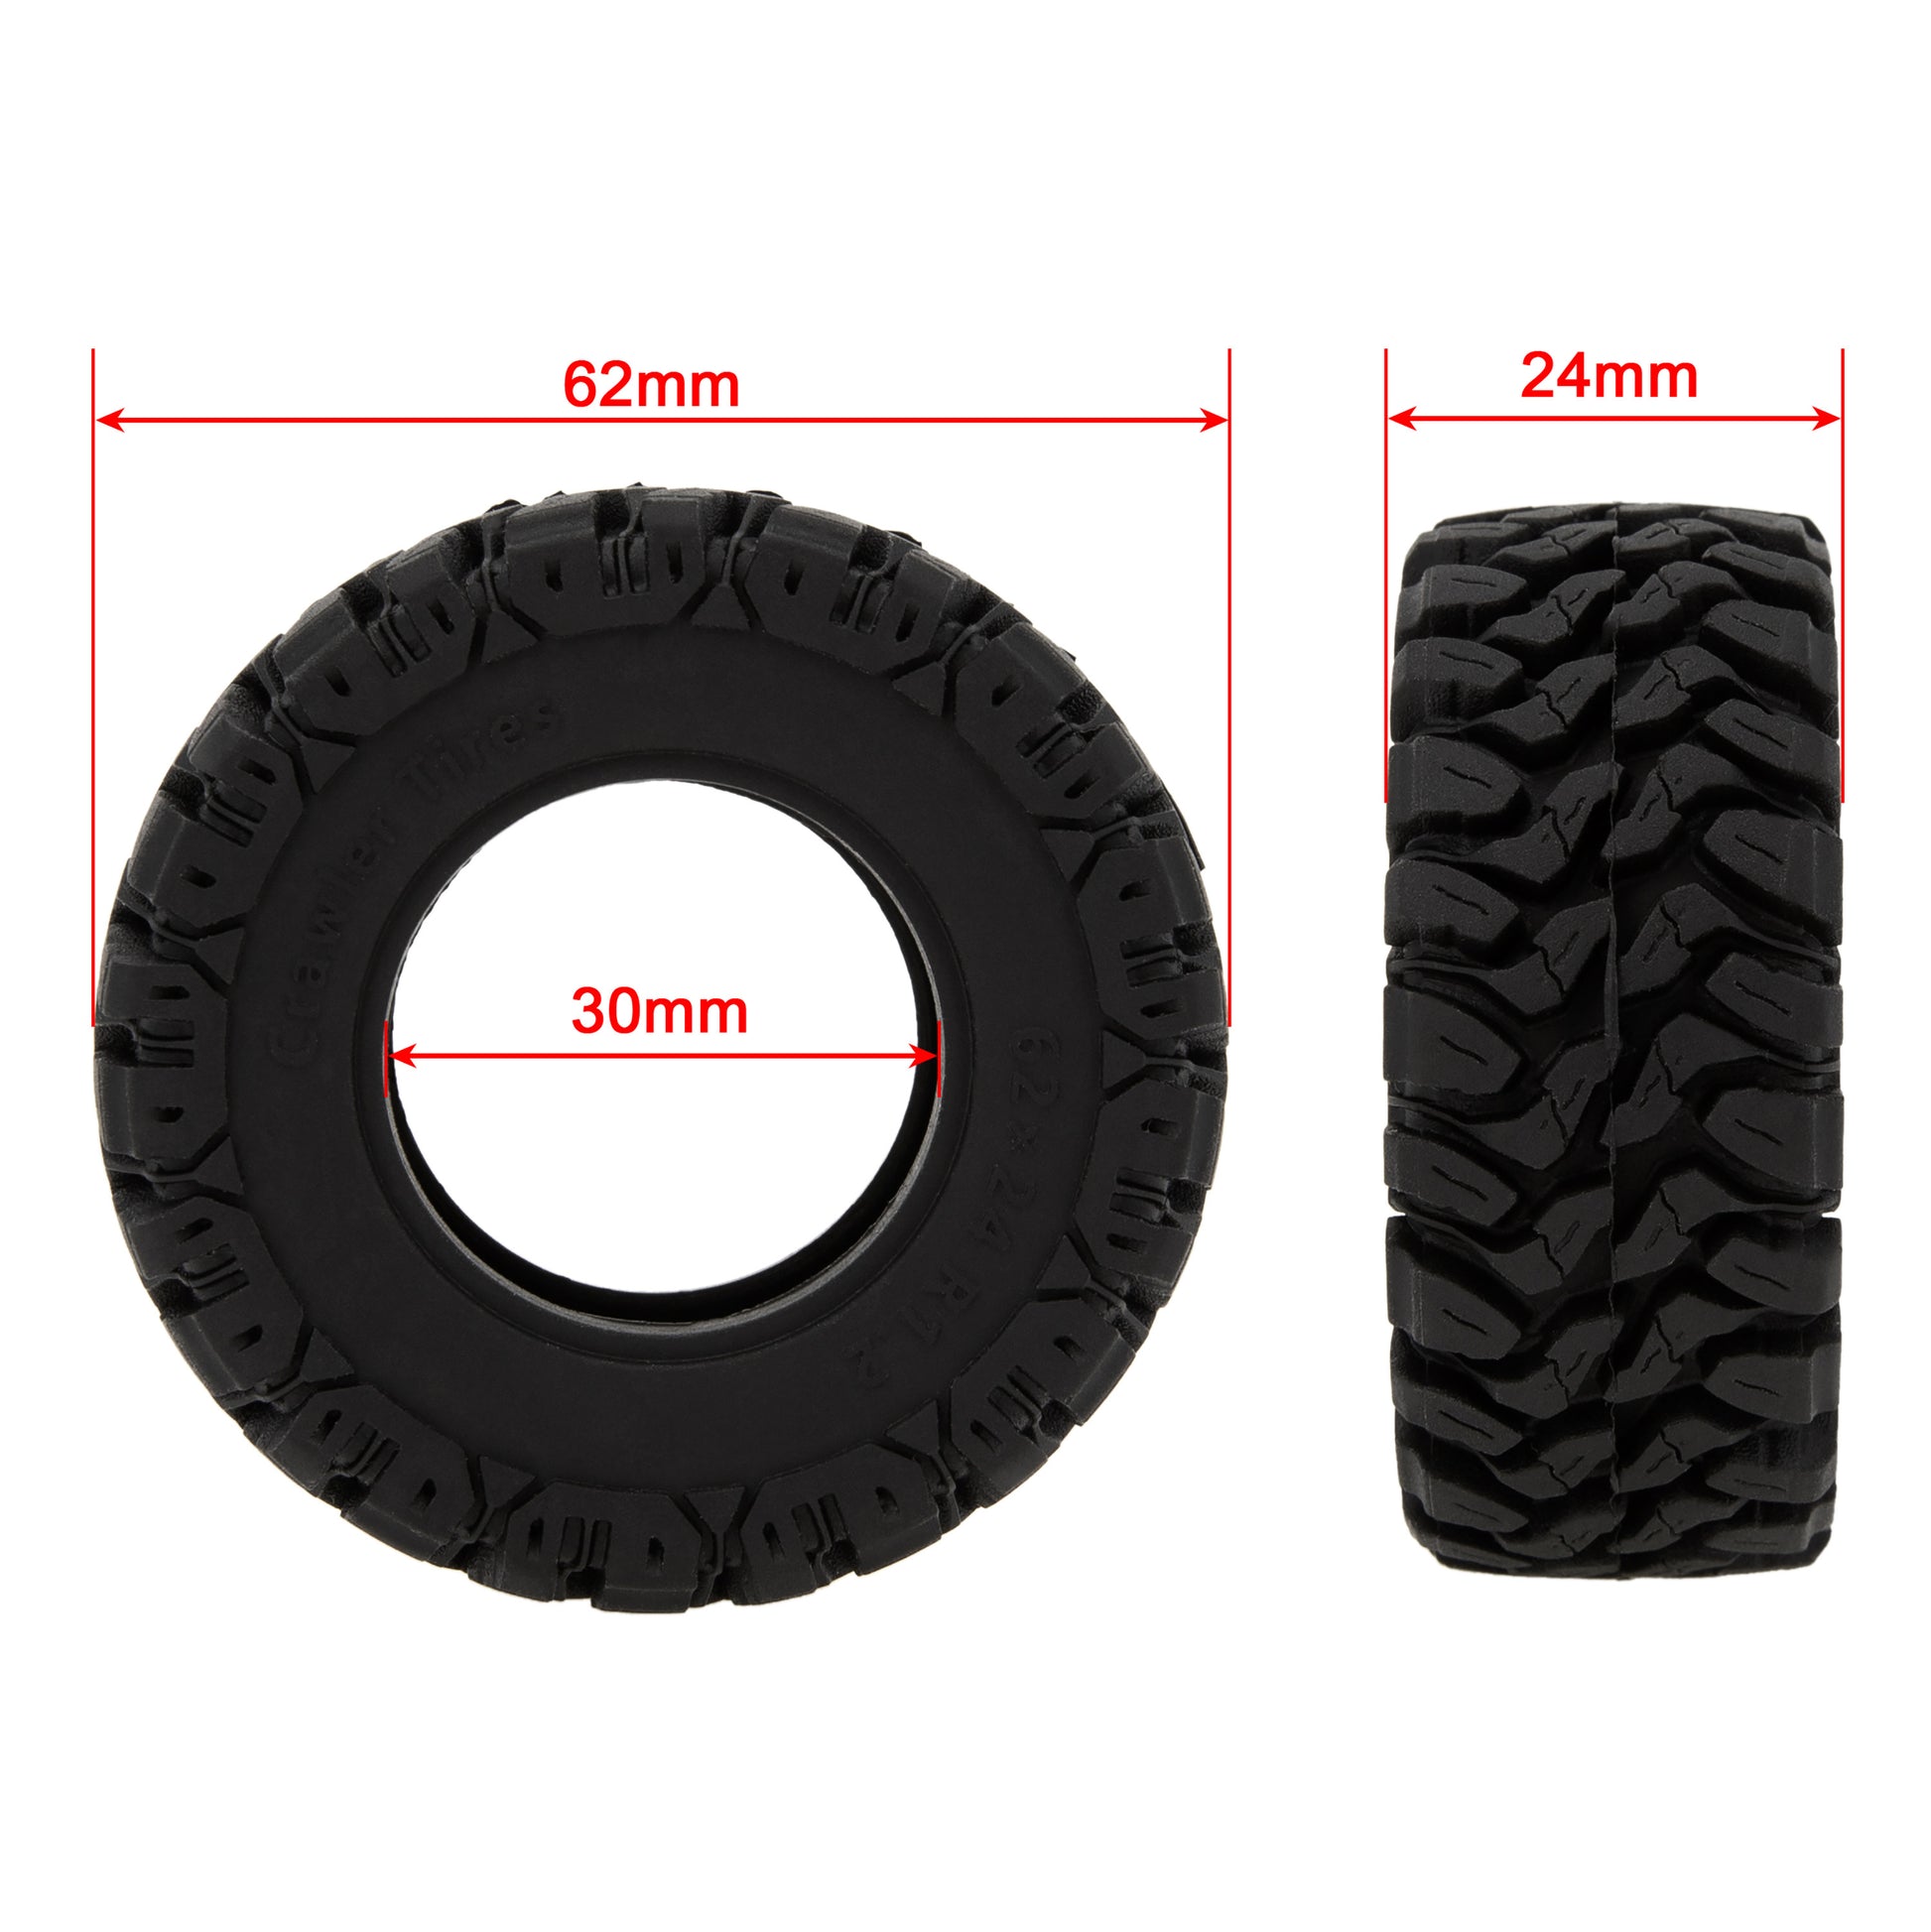 B type 1.2-inch Beadlock Tires Size for SCX24, TRX4M, FCX24